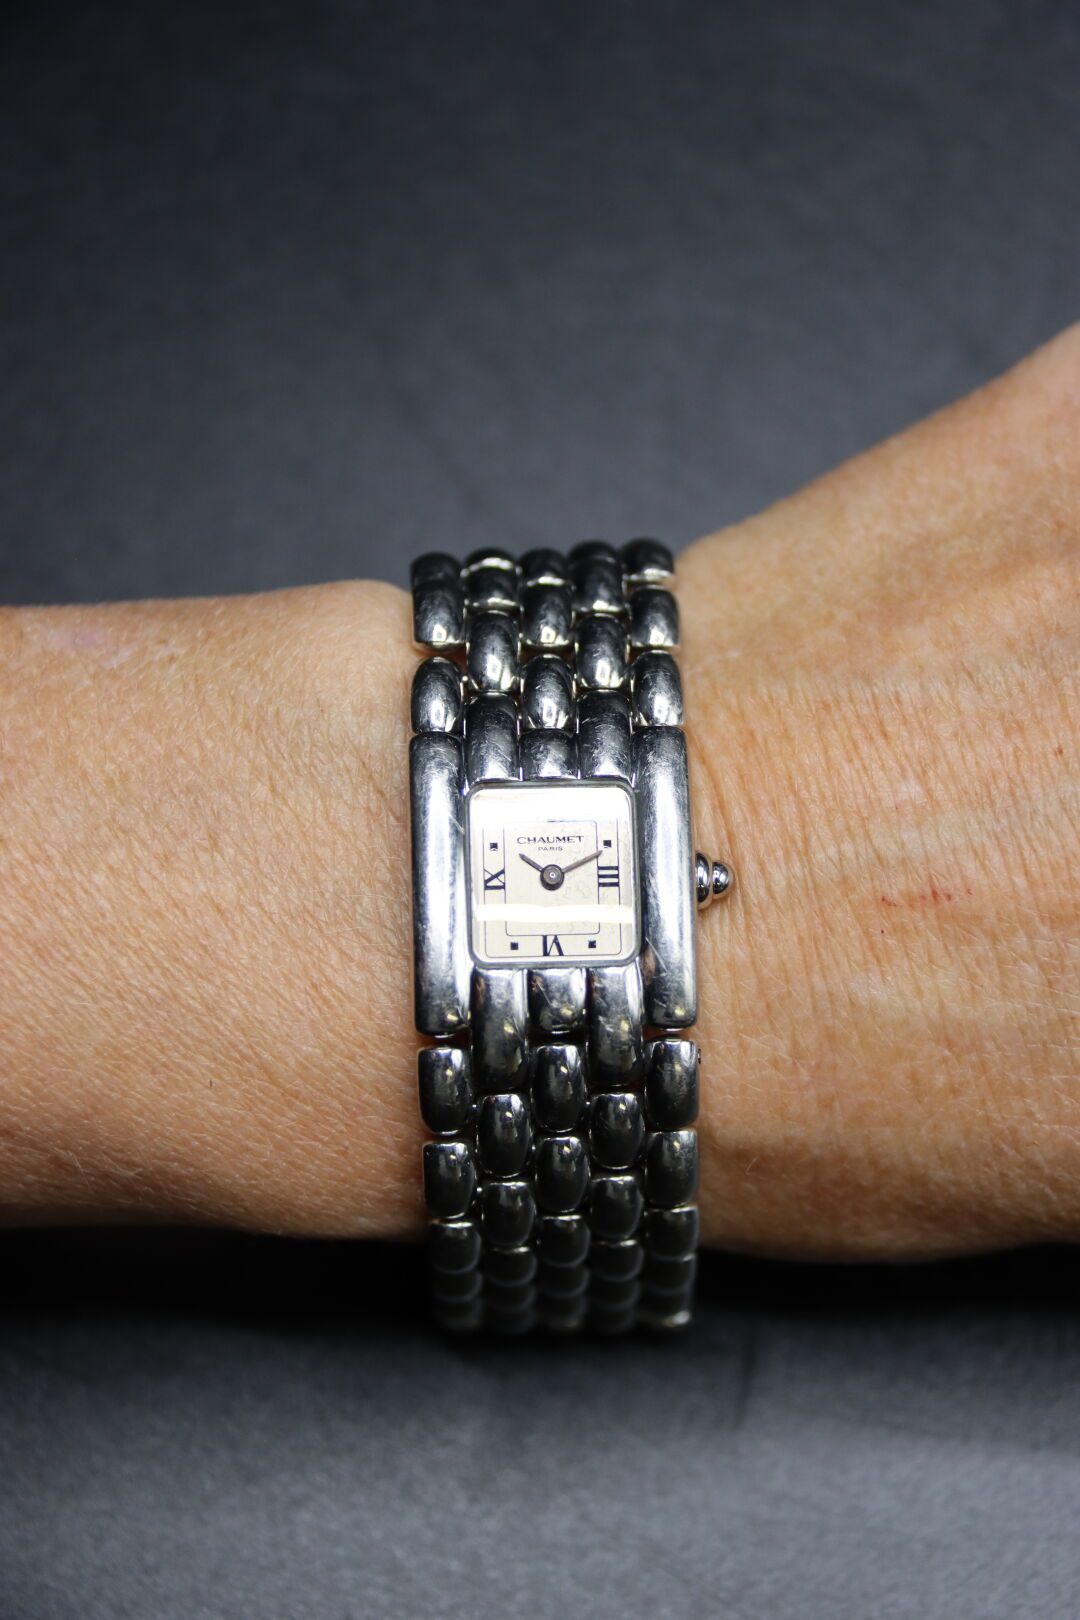 Null Chaumet lady's wrist watch steel quartz movement.

Expert: Pierre Delaye